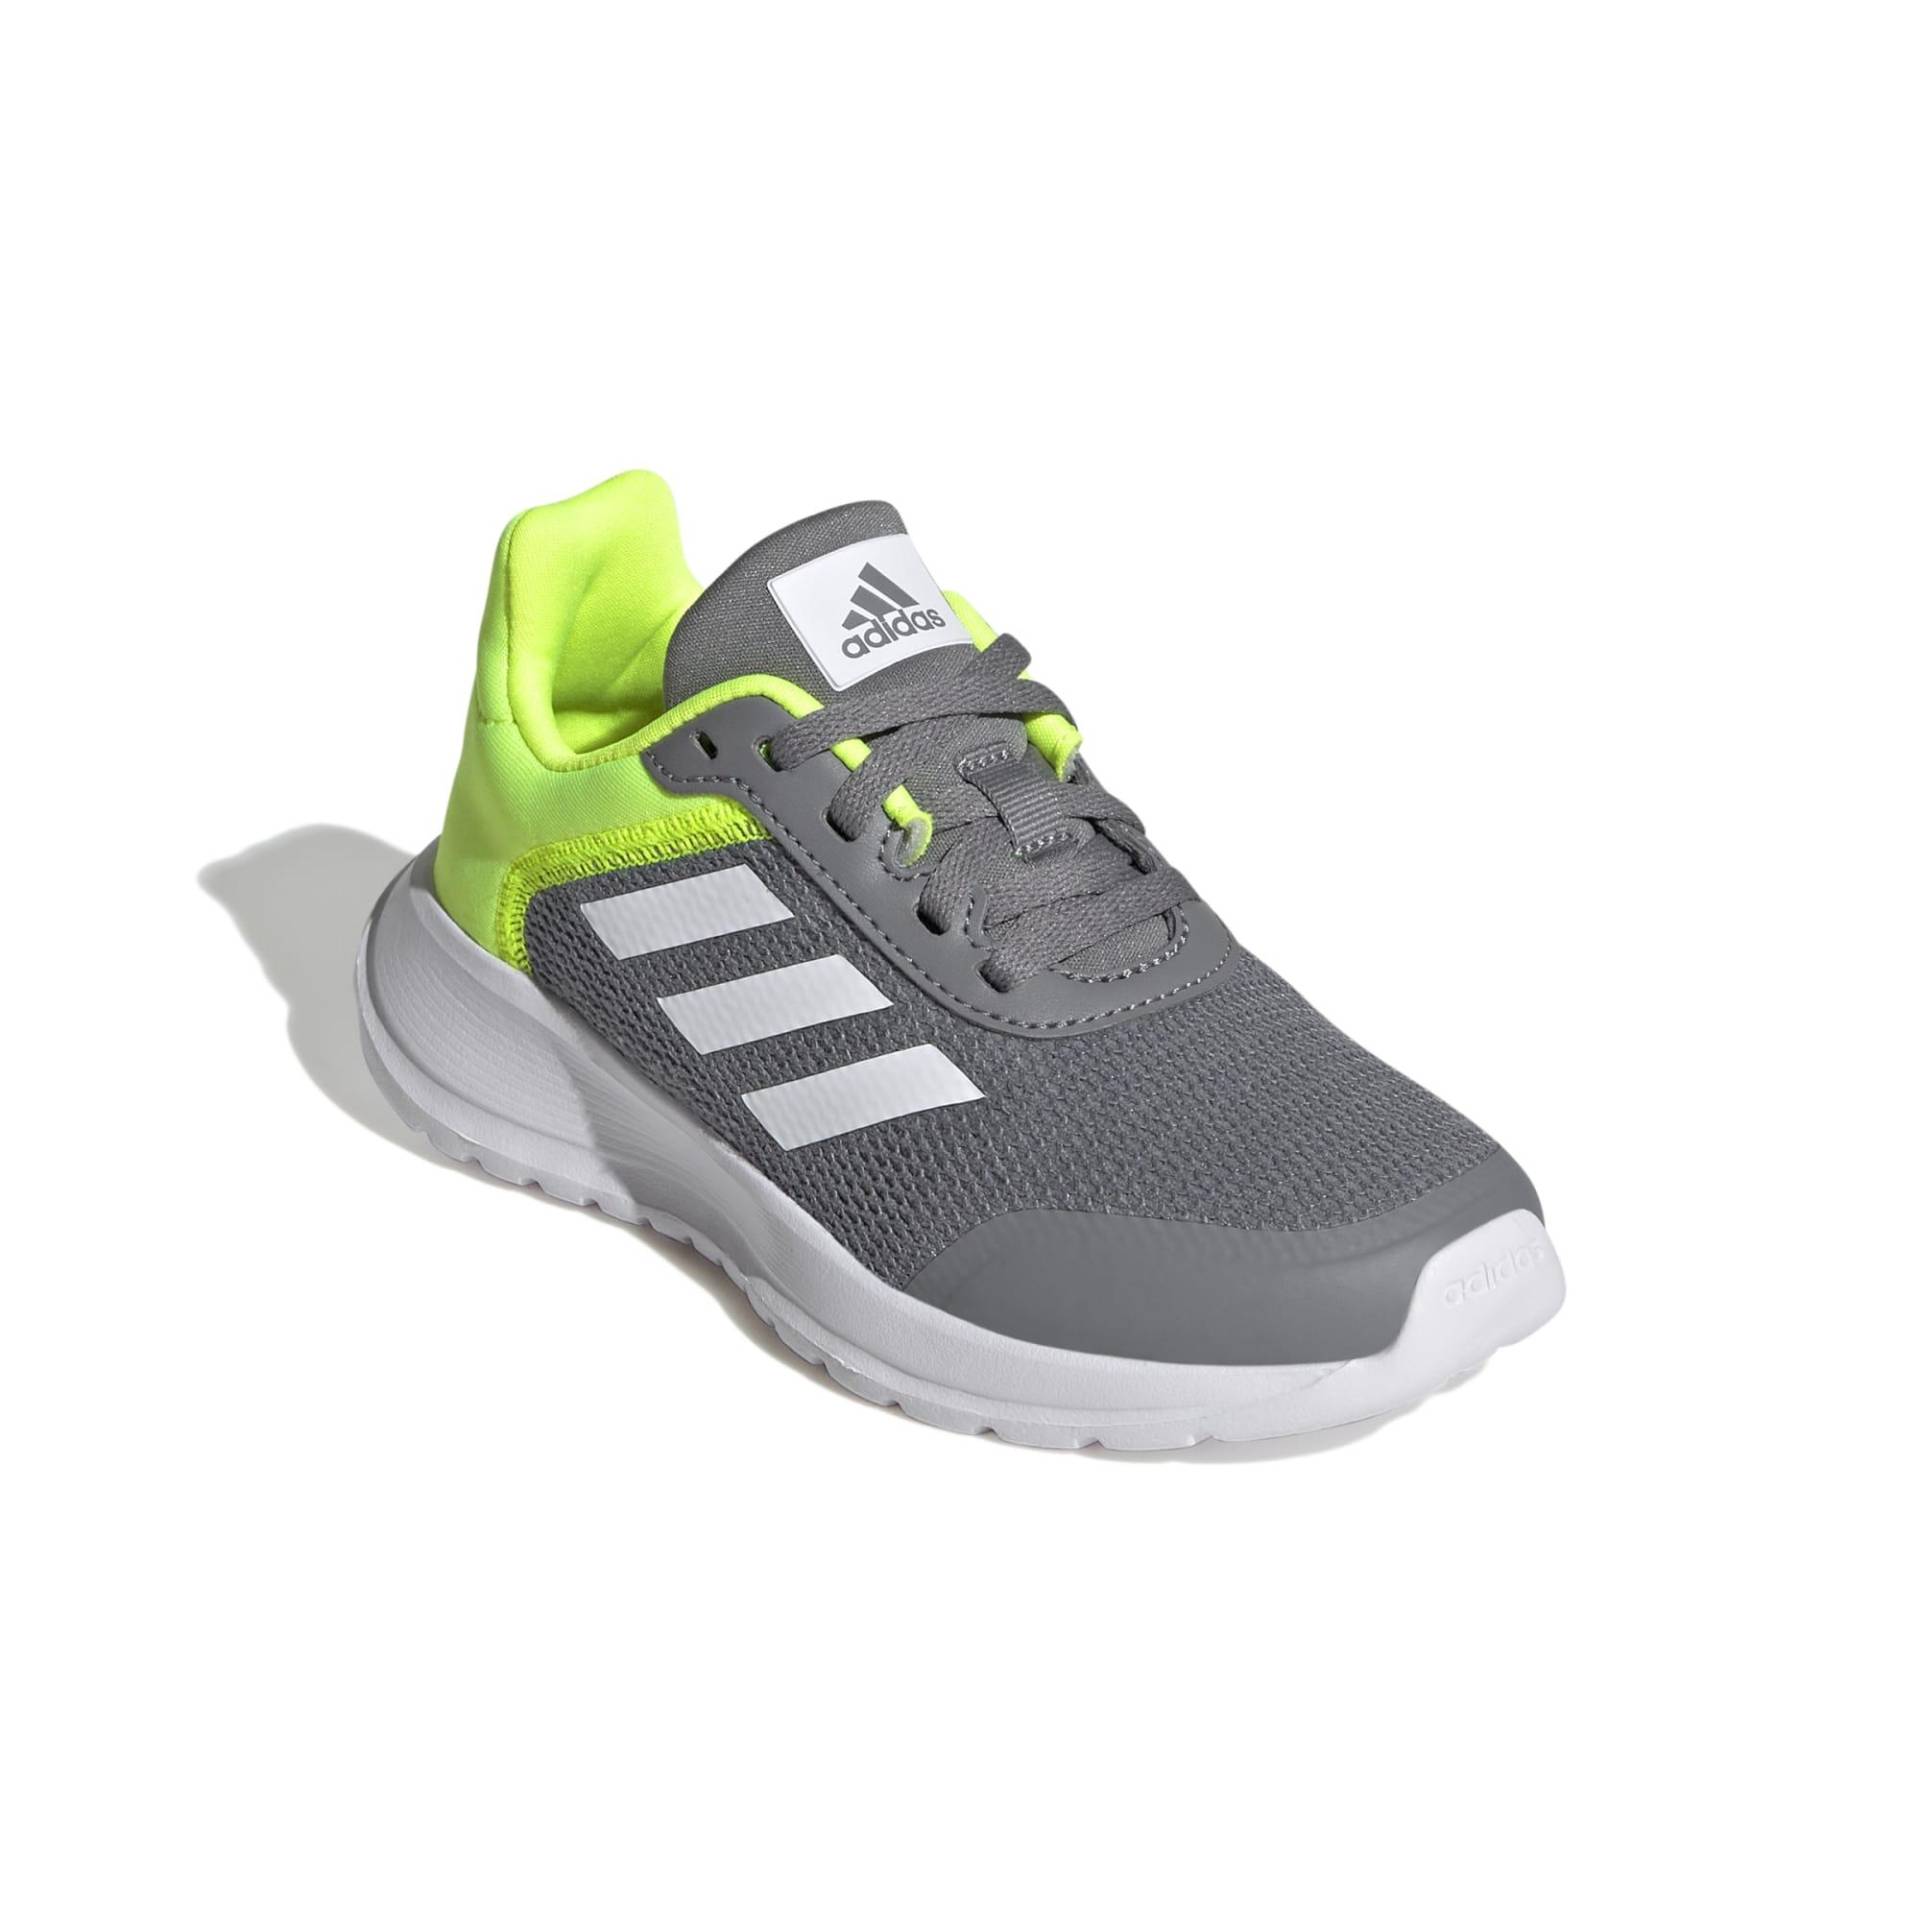 ADIDAS Laufschuhe Kinder - Tensaur Run grau/weiß/gelb von Adidas